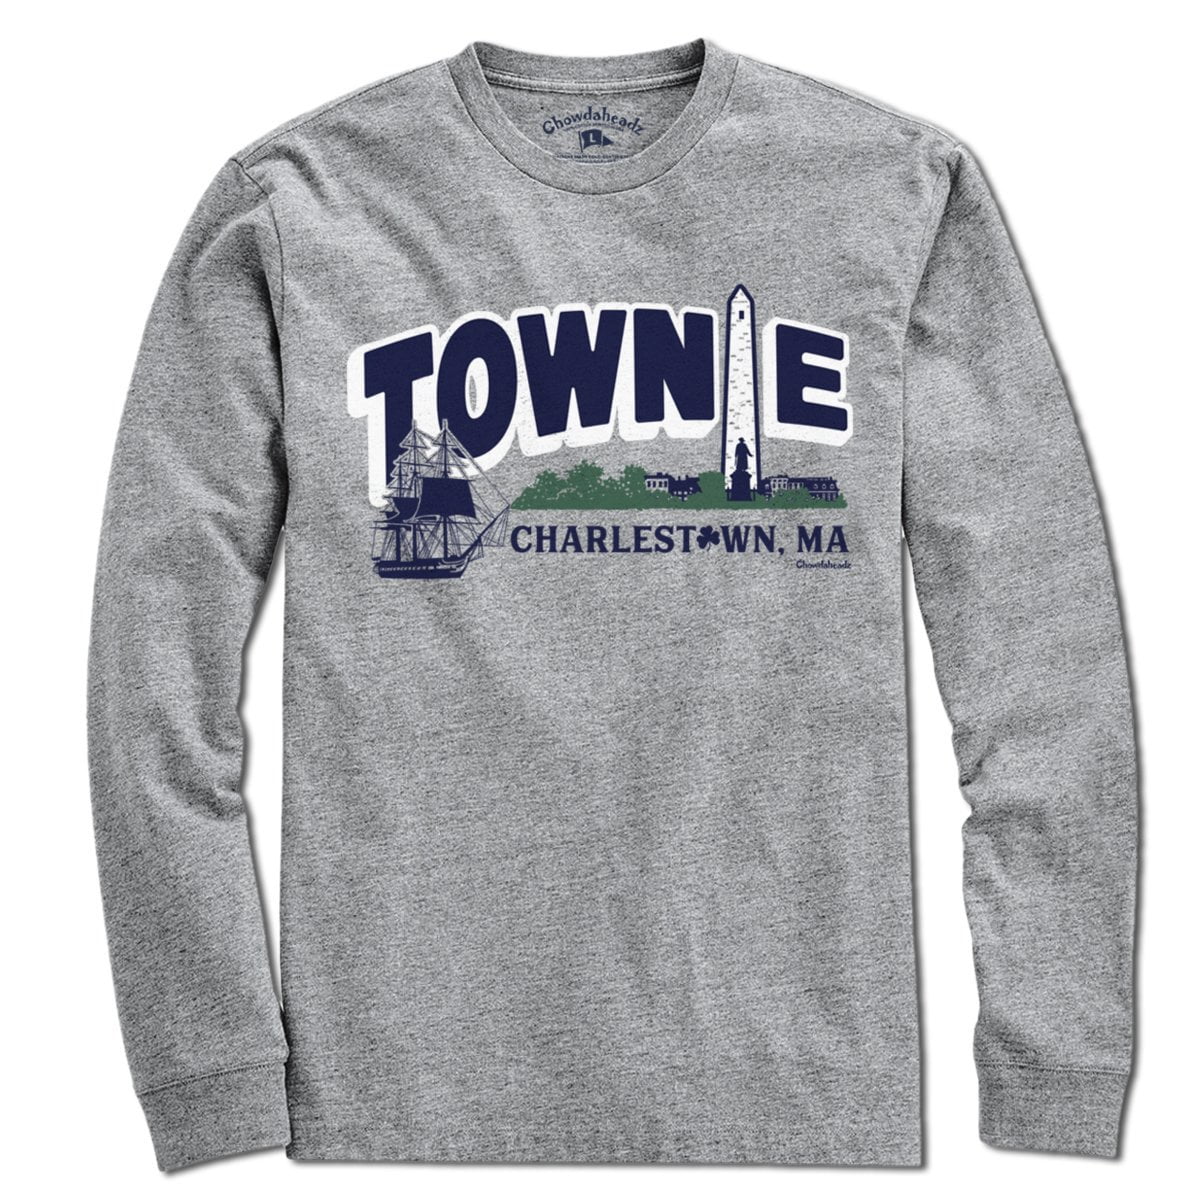 Townie Charlestown MA T-Shirt - Chowdaheadz